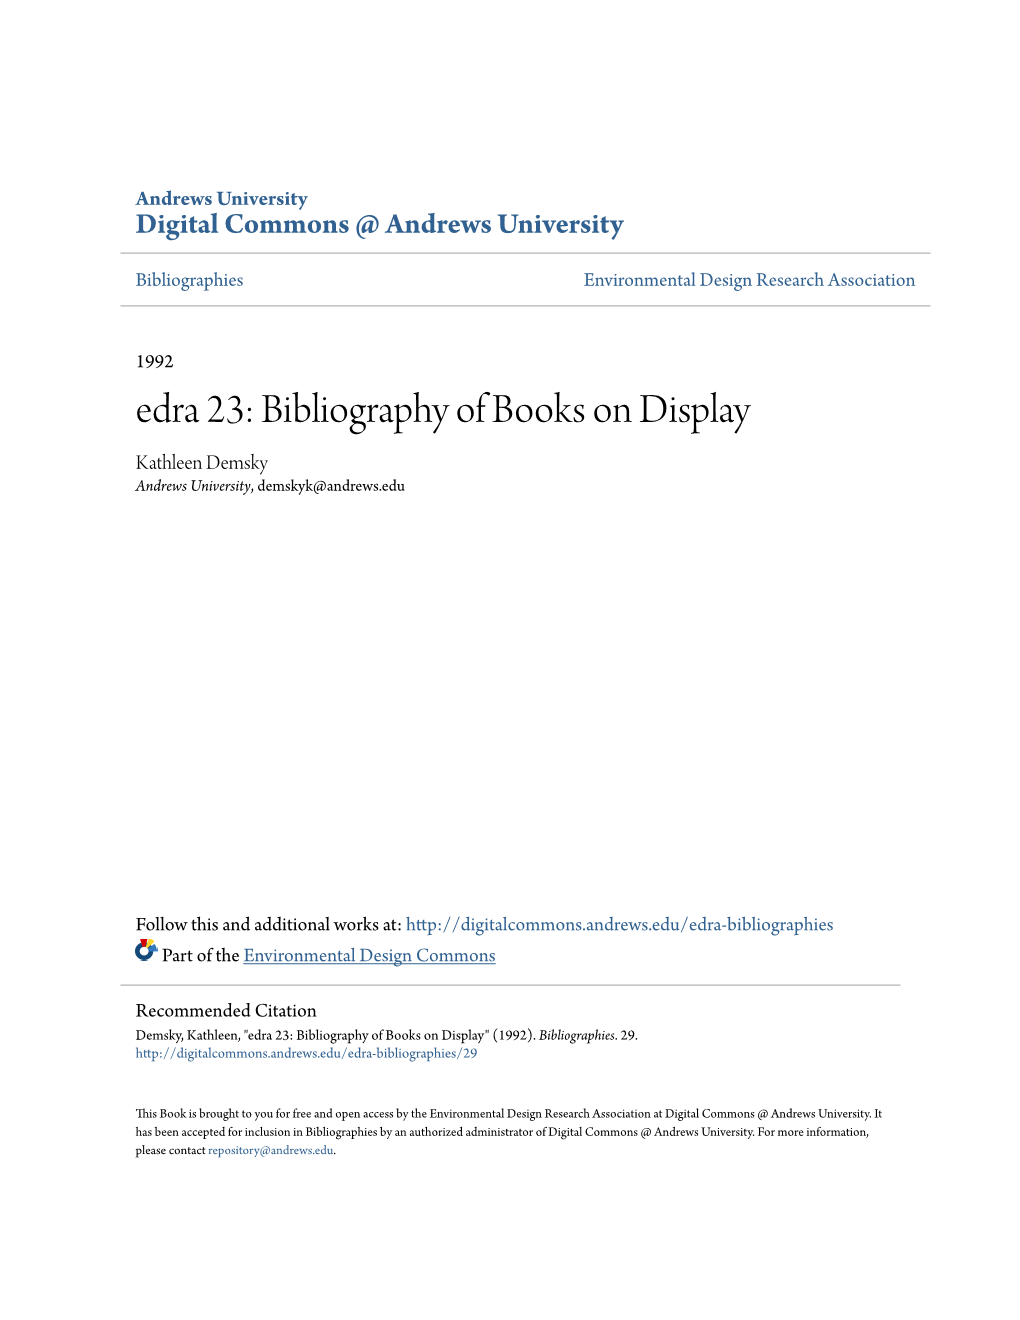 Edra 23: Bibliography of Books on Display Kathleen Demsky Andrews University, Demskyk@Andrews.Edu